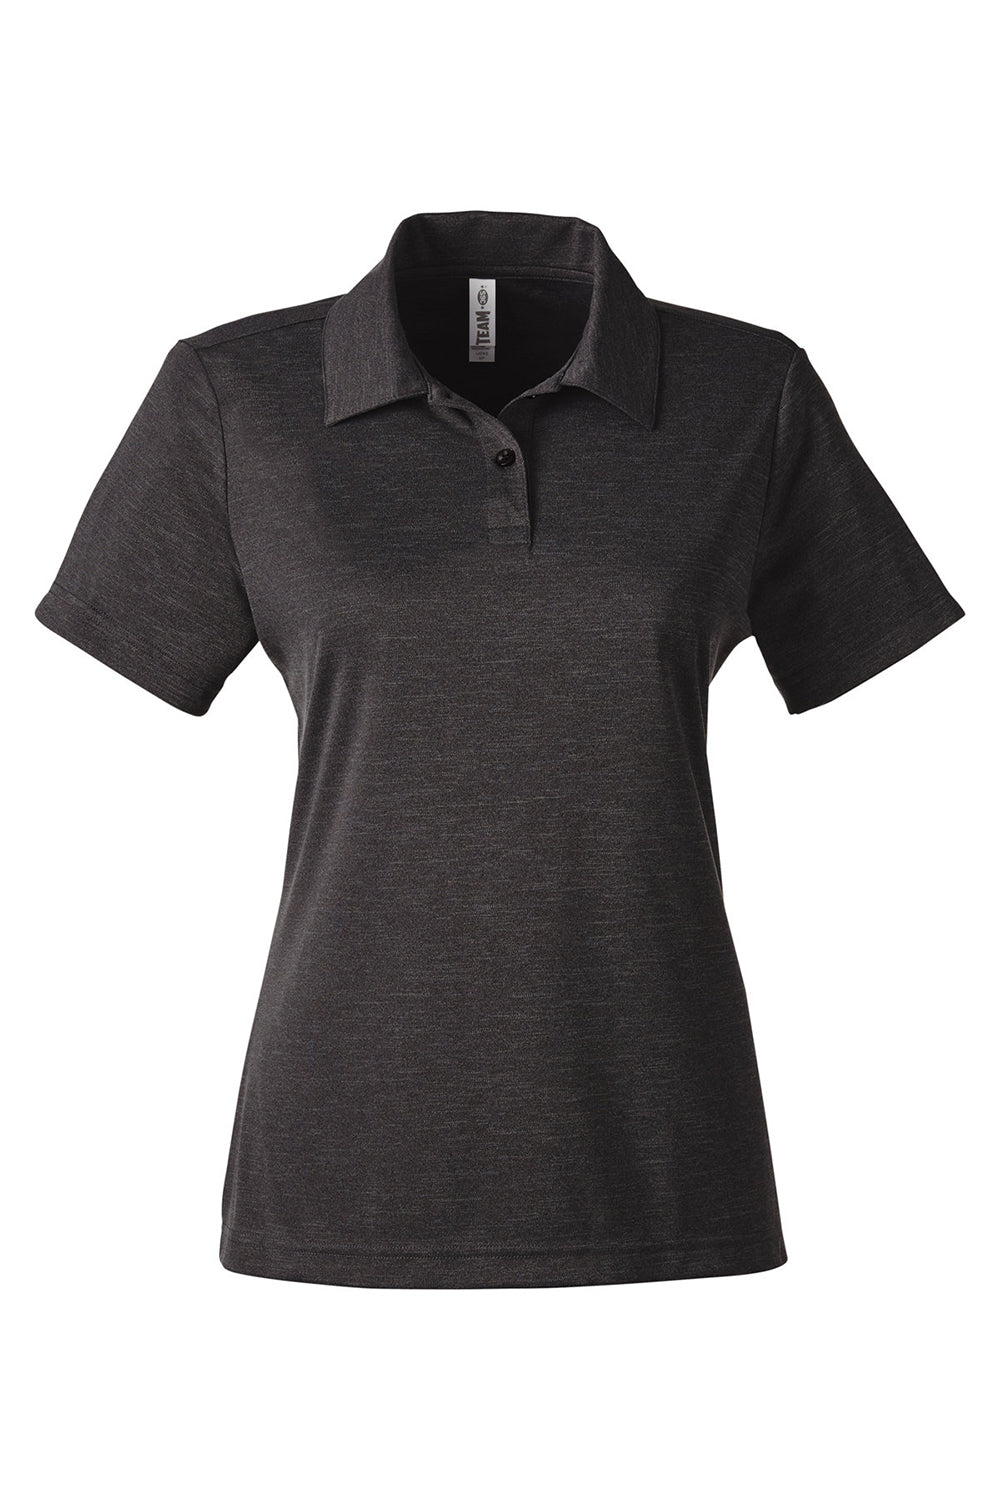 Team 365 TT51HW Womens Zone Sonic Moisture Wicking Short Sleeve Polo Shirt Heather Black Flat Front